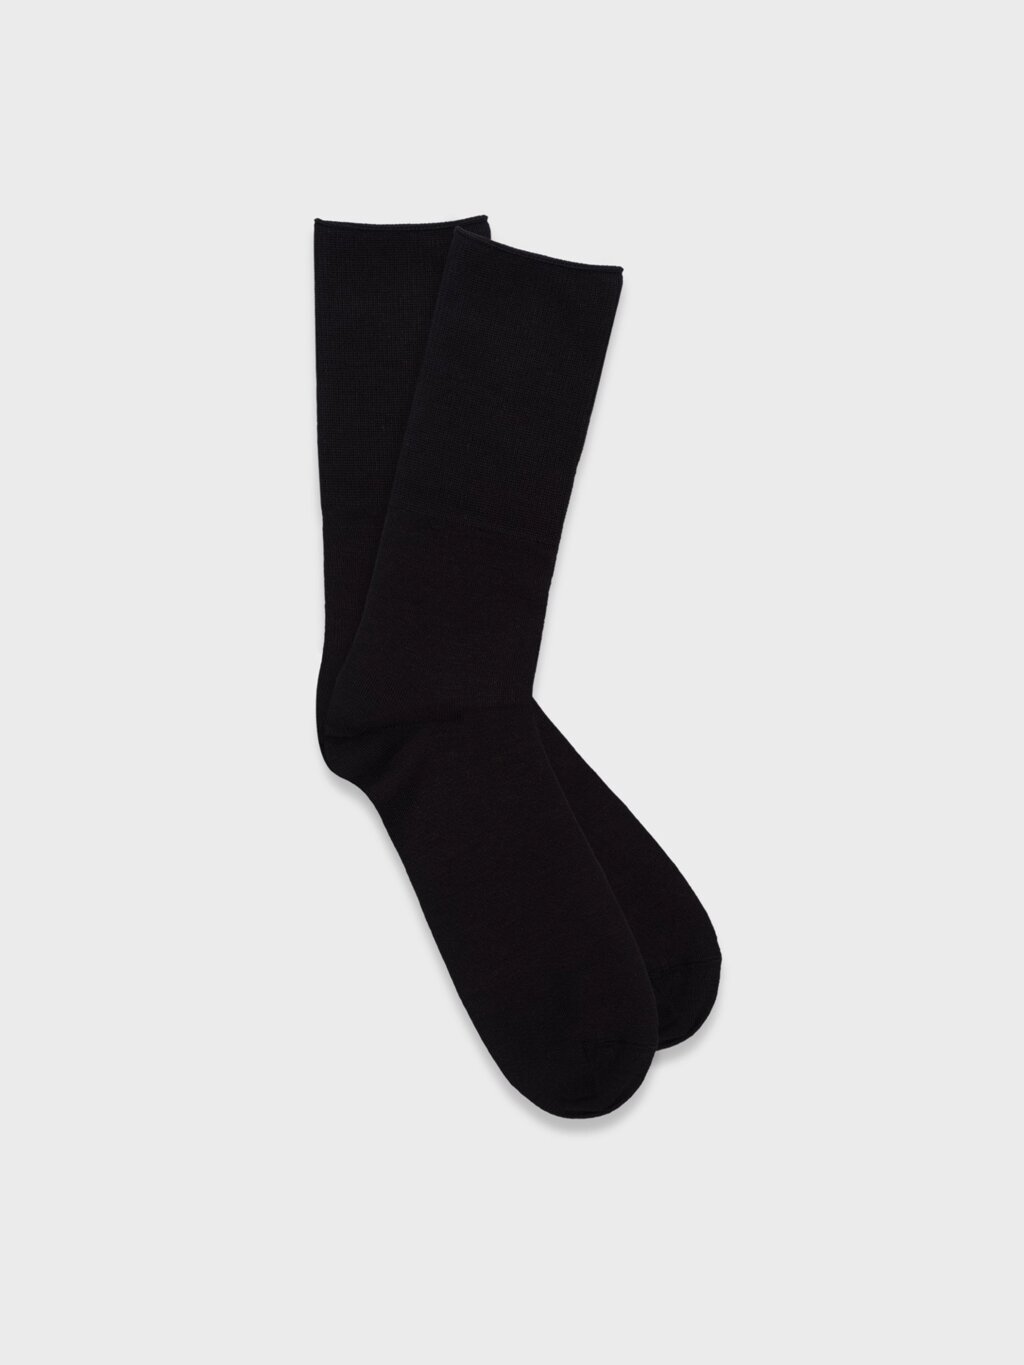 Базовые женские носки (35-37) от компании Admi - фото 1